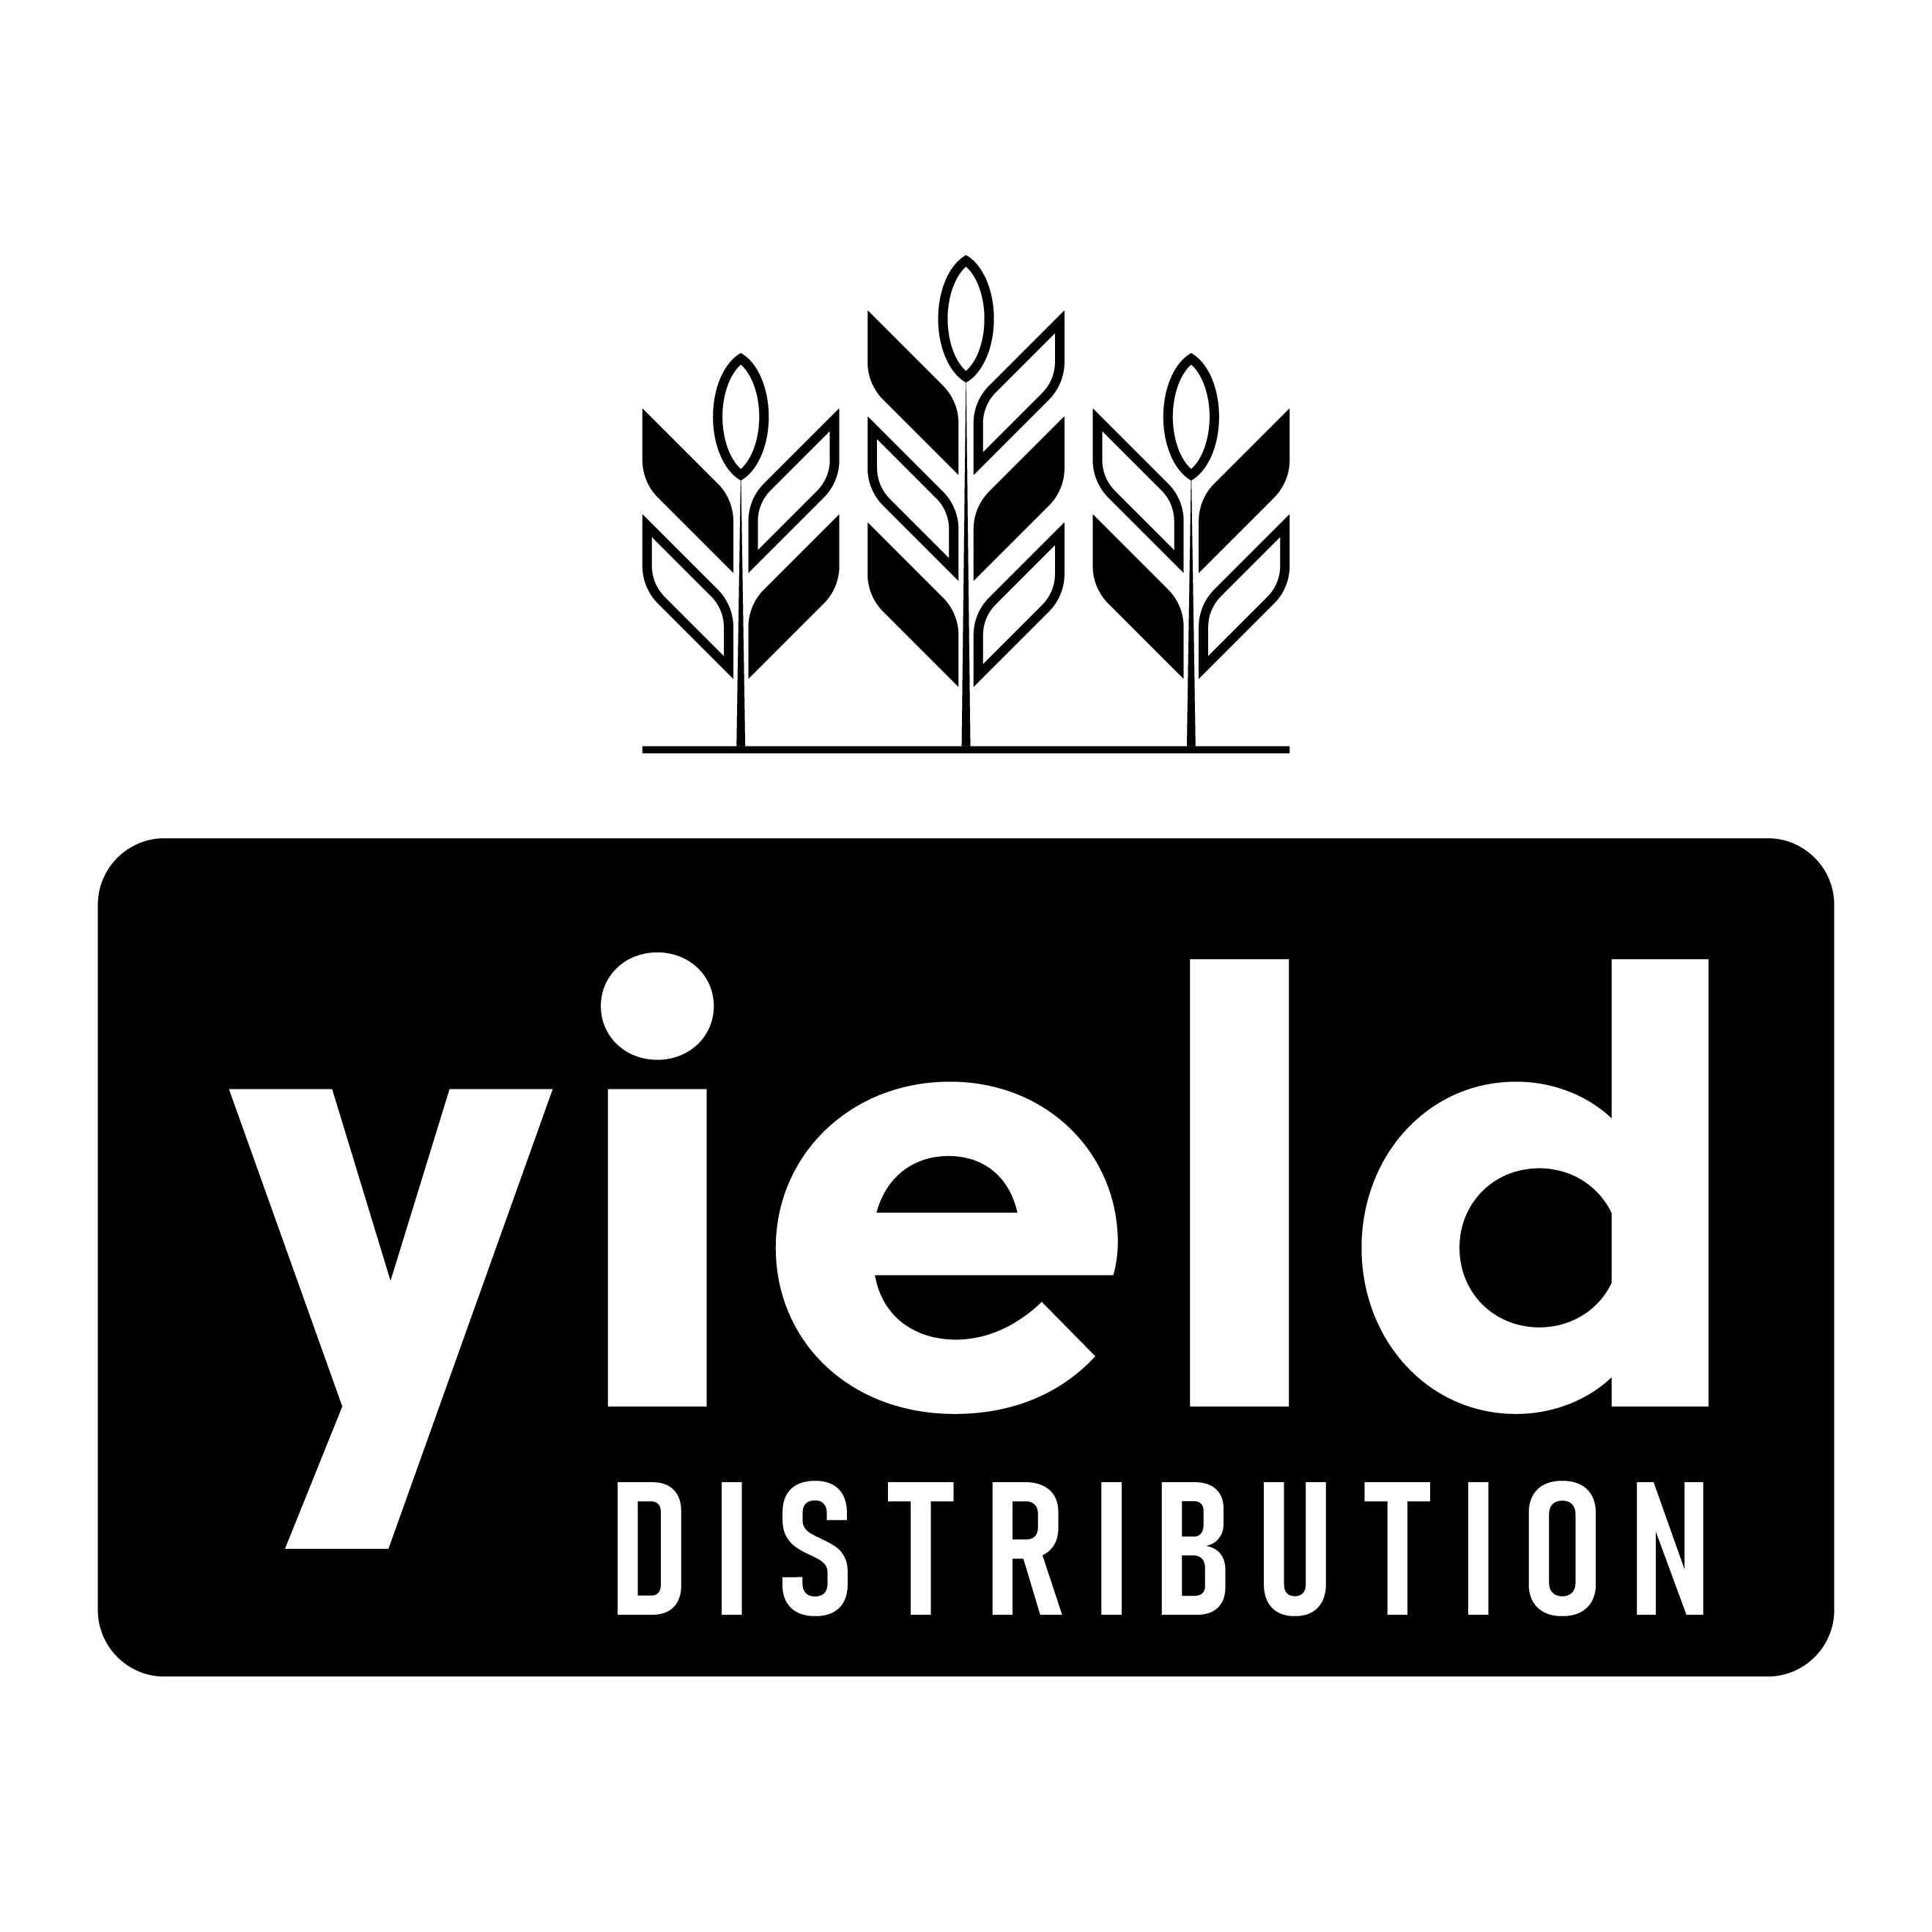 Yield Distribution